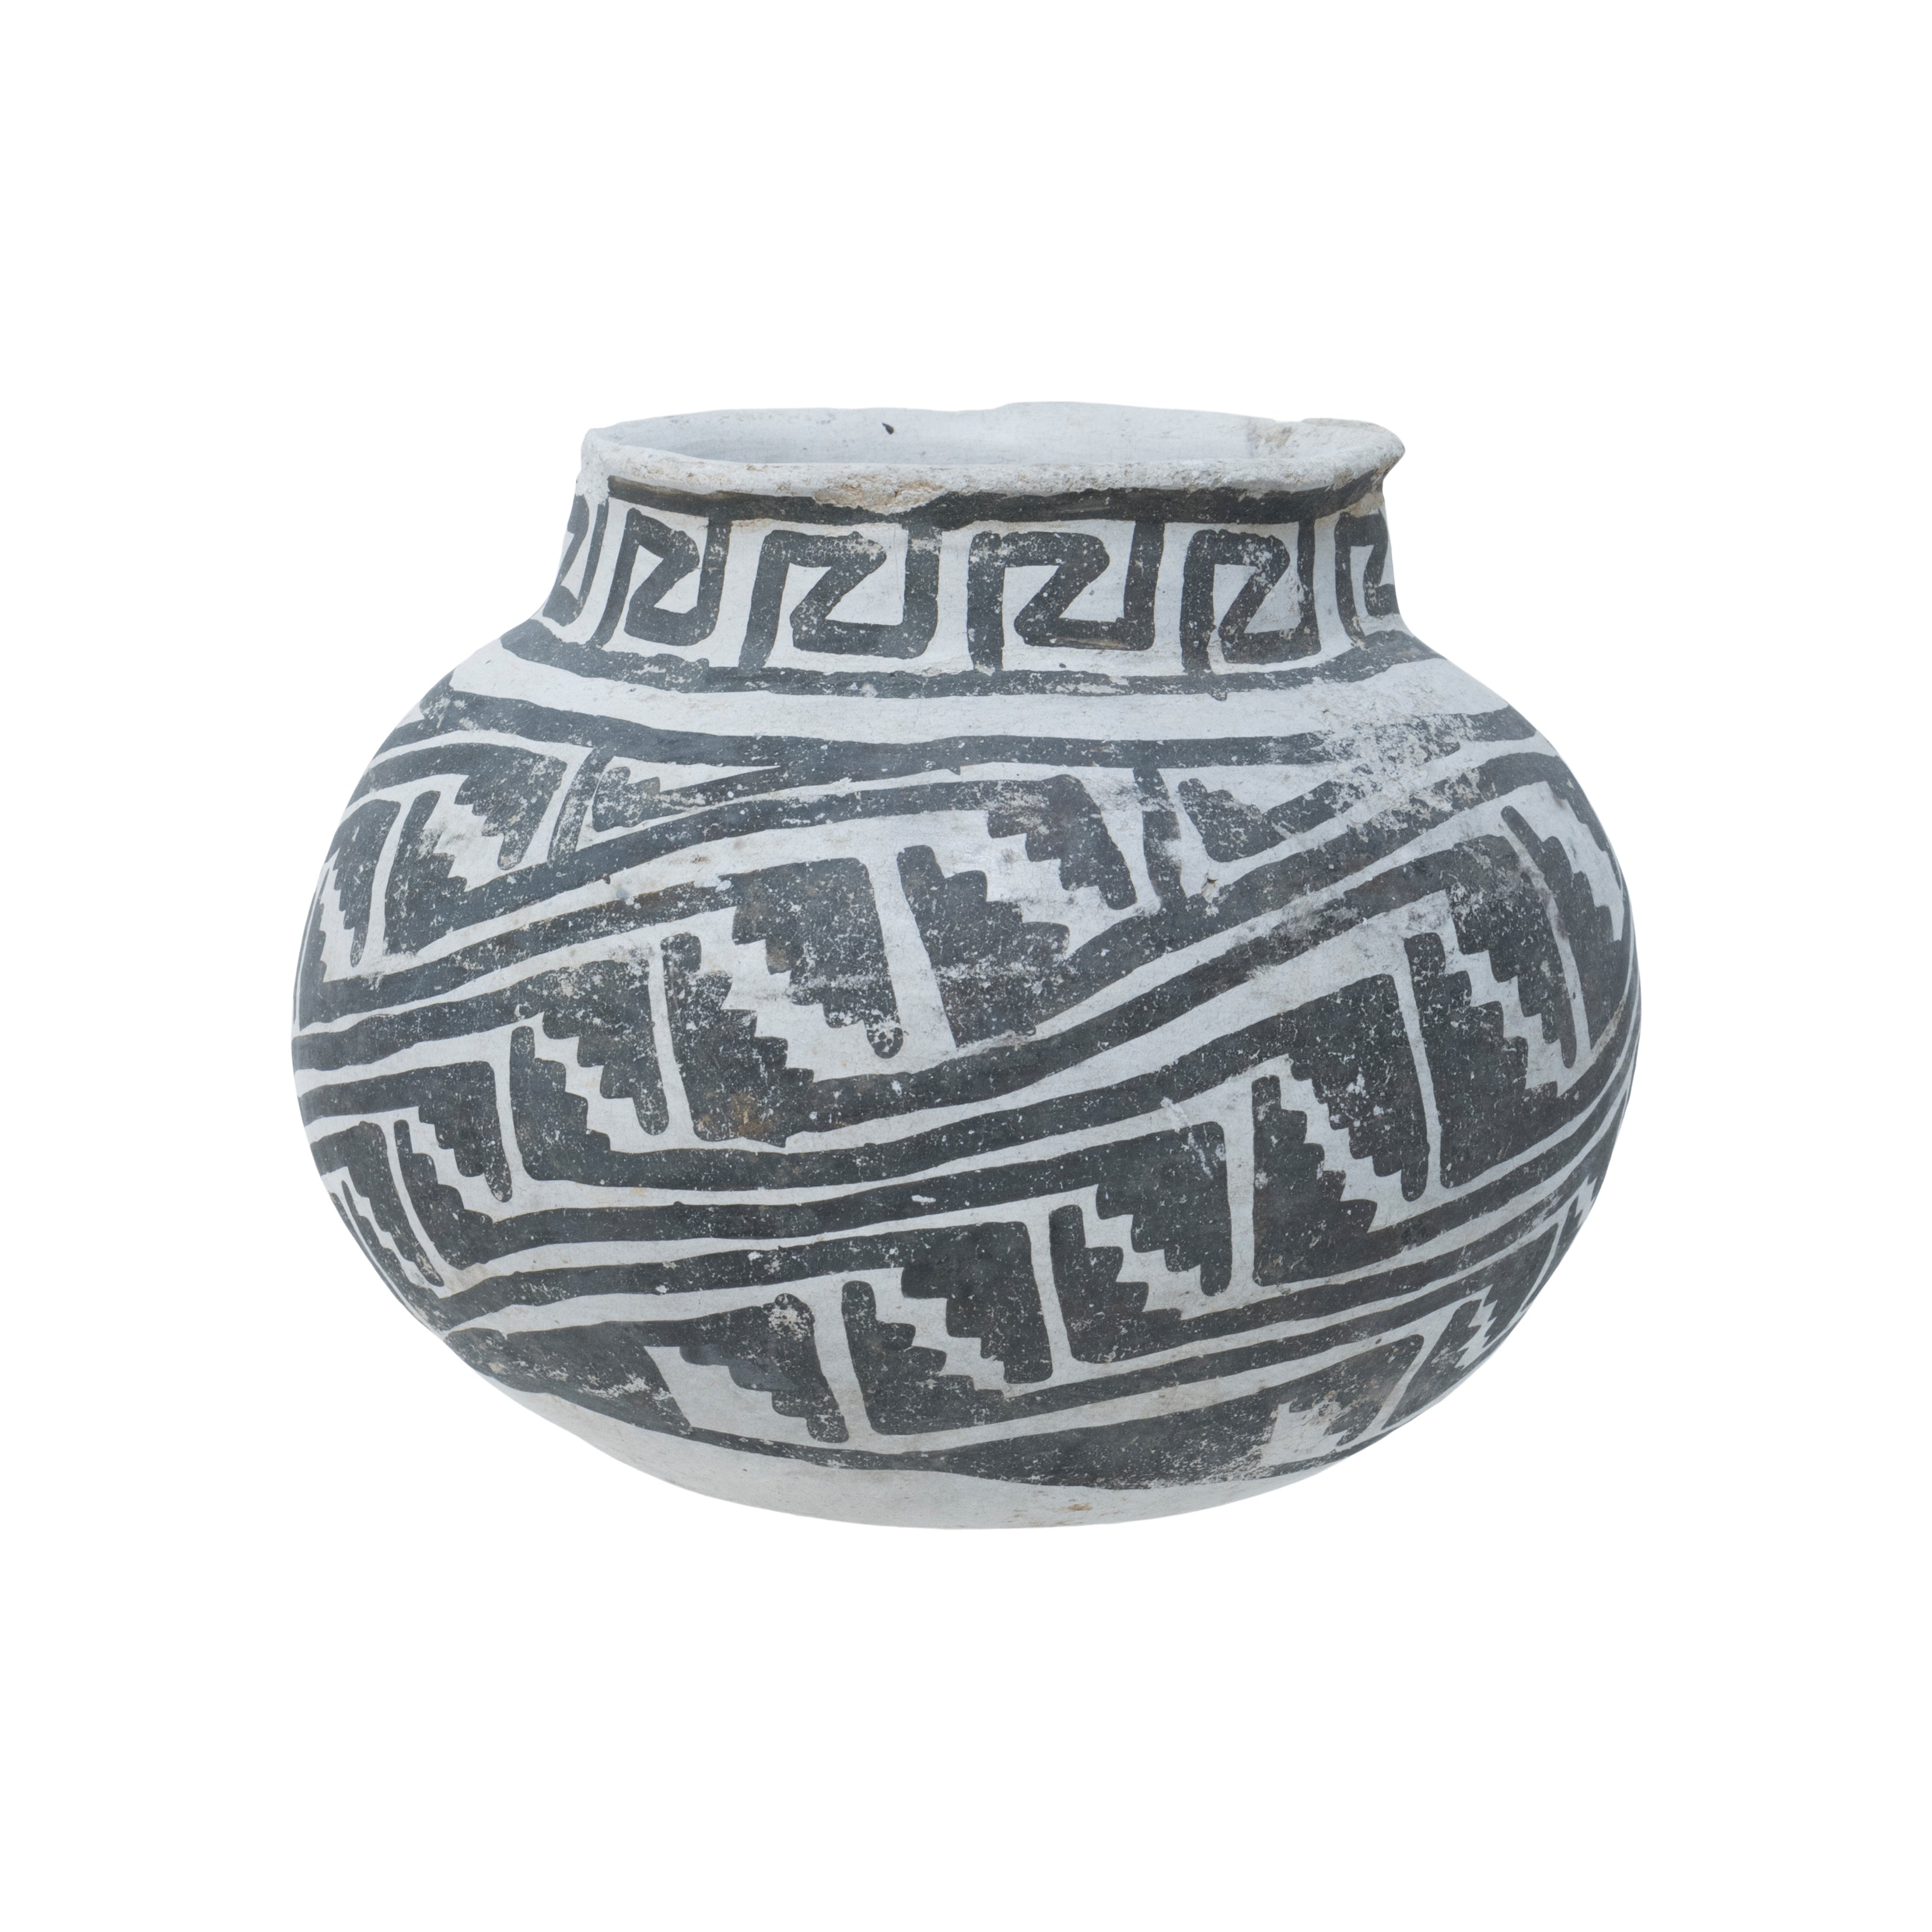 Prehistoric Anasazi Jar